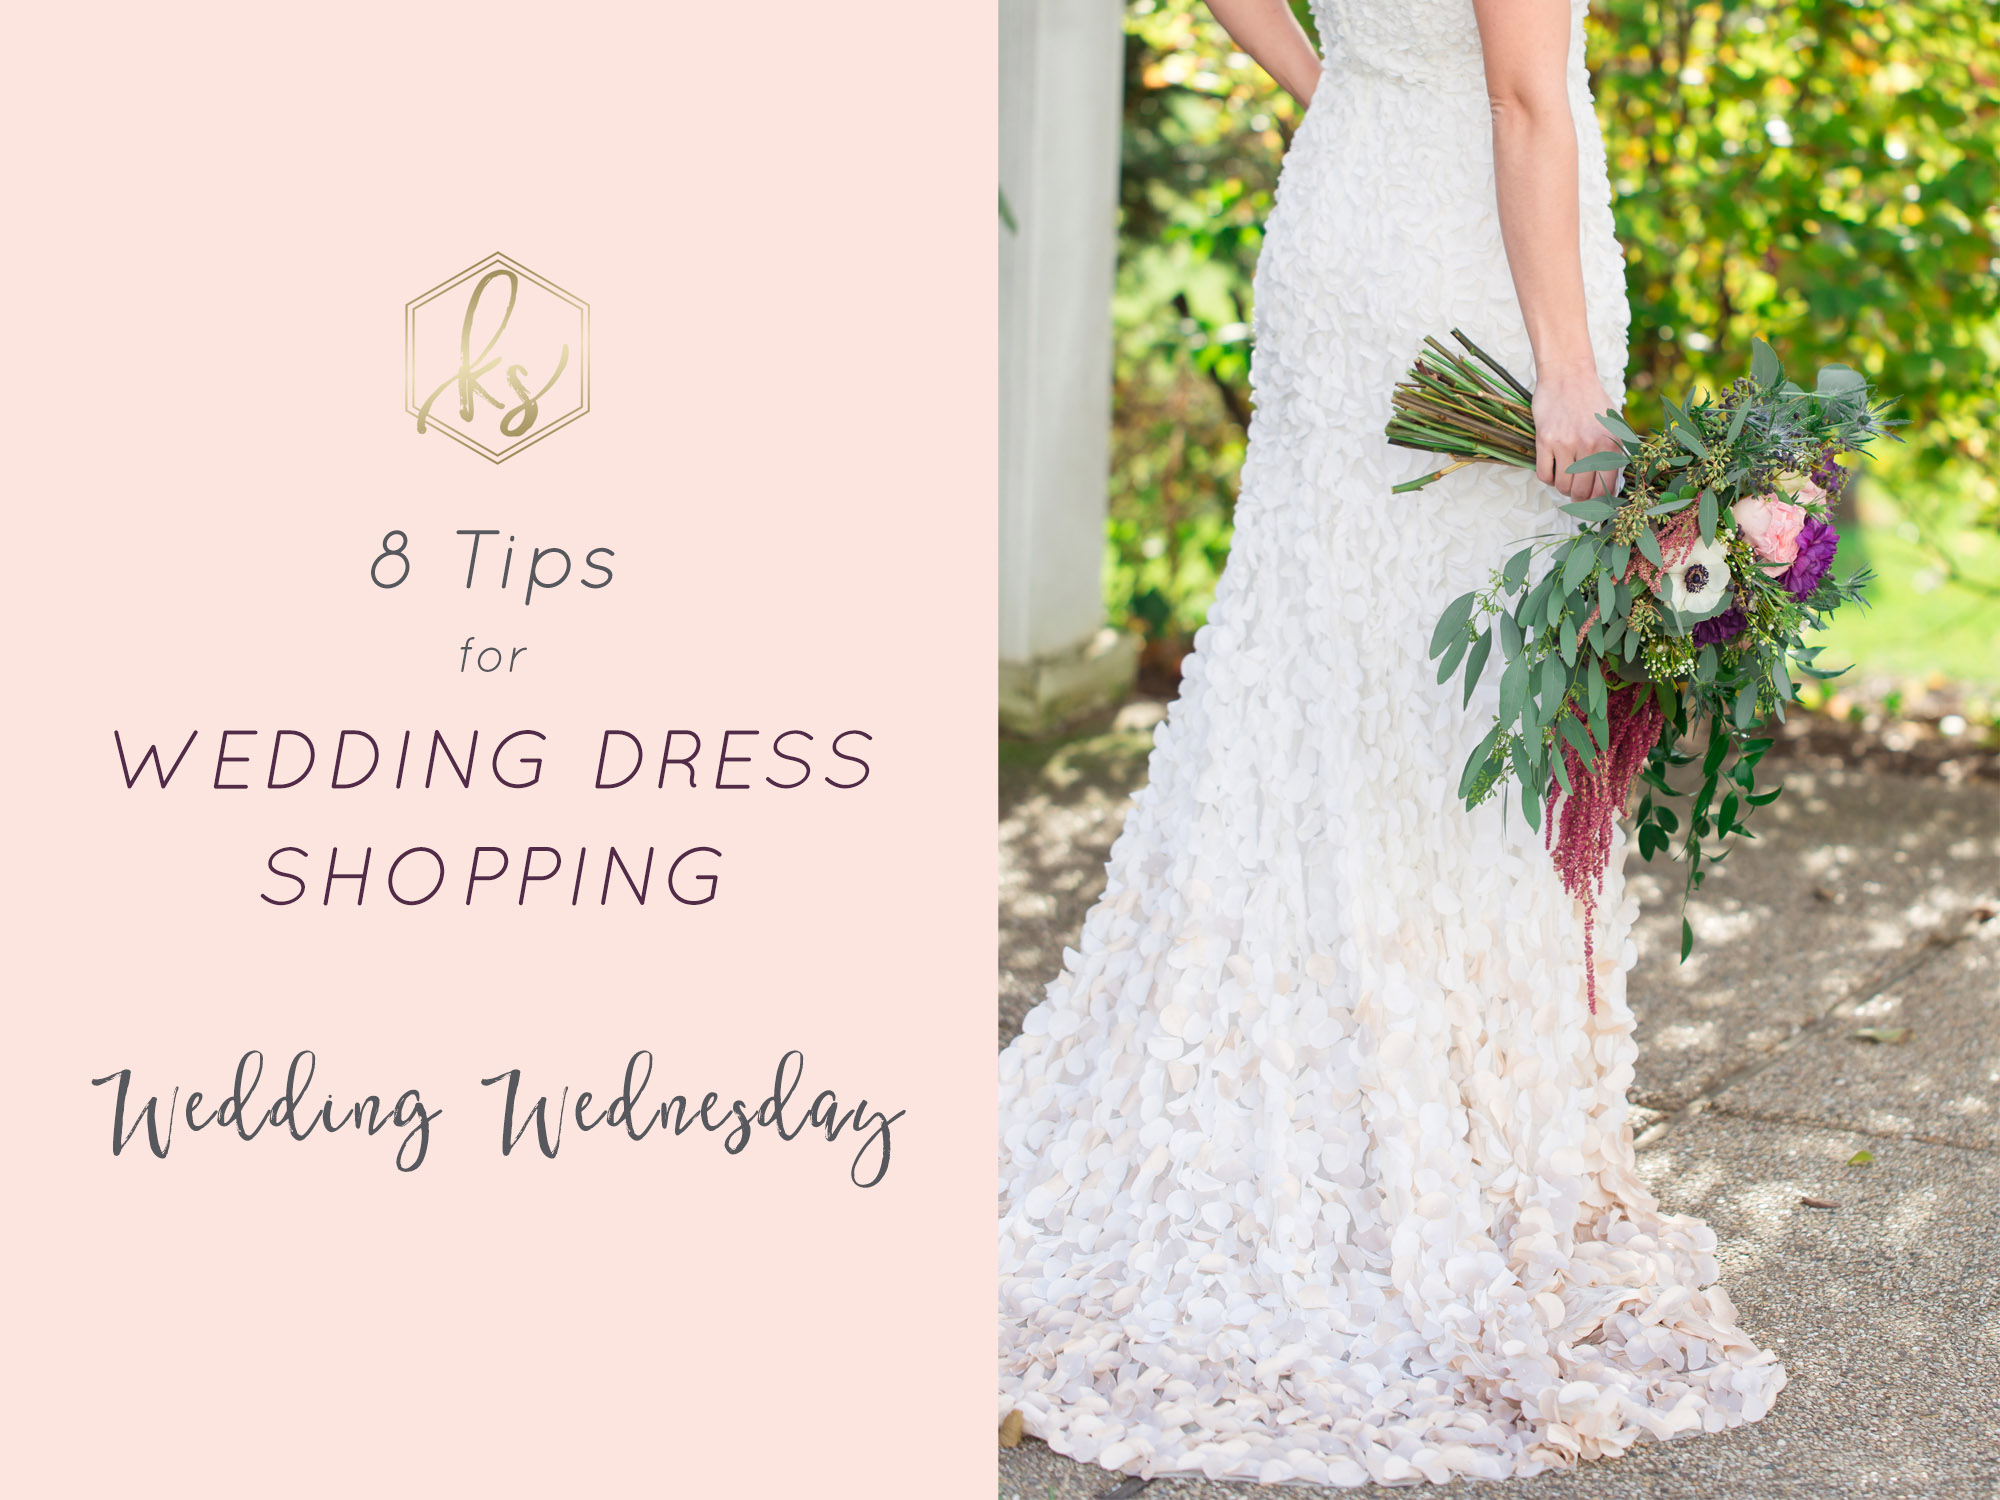 8 Tips for Wedding Dress Shopping by Karen Shoufler Photography